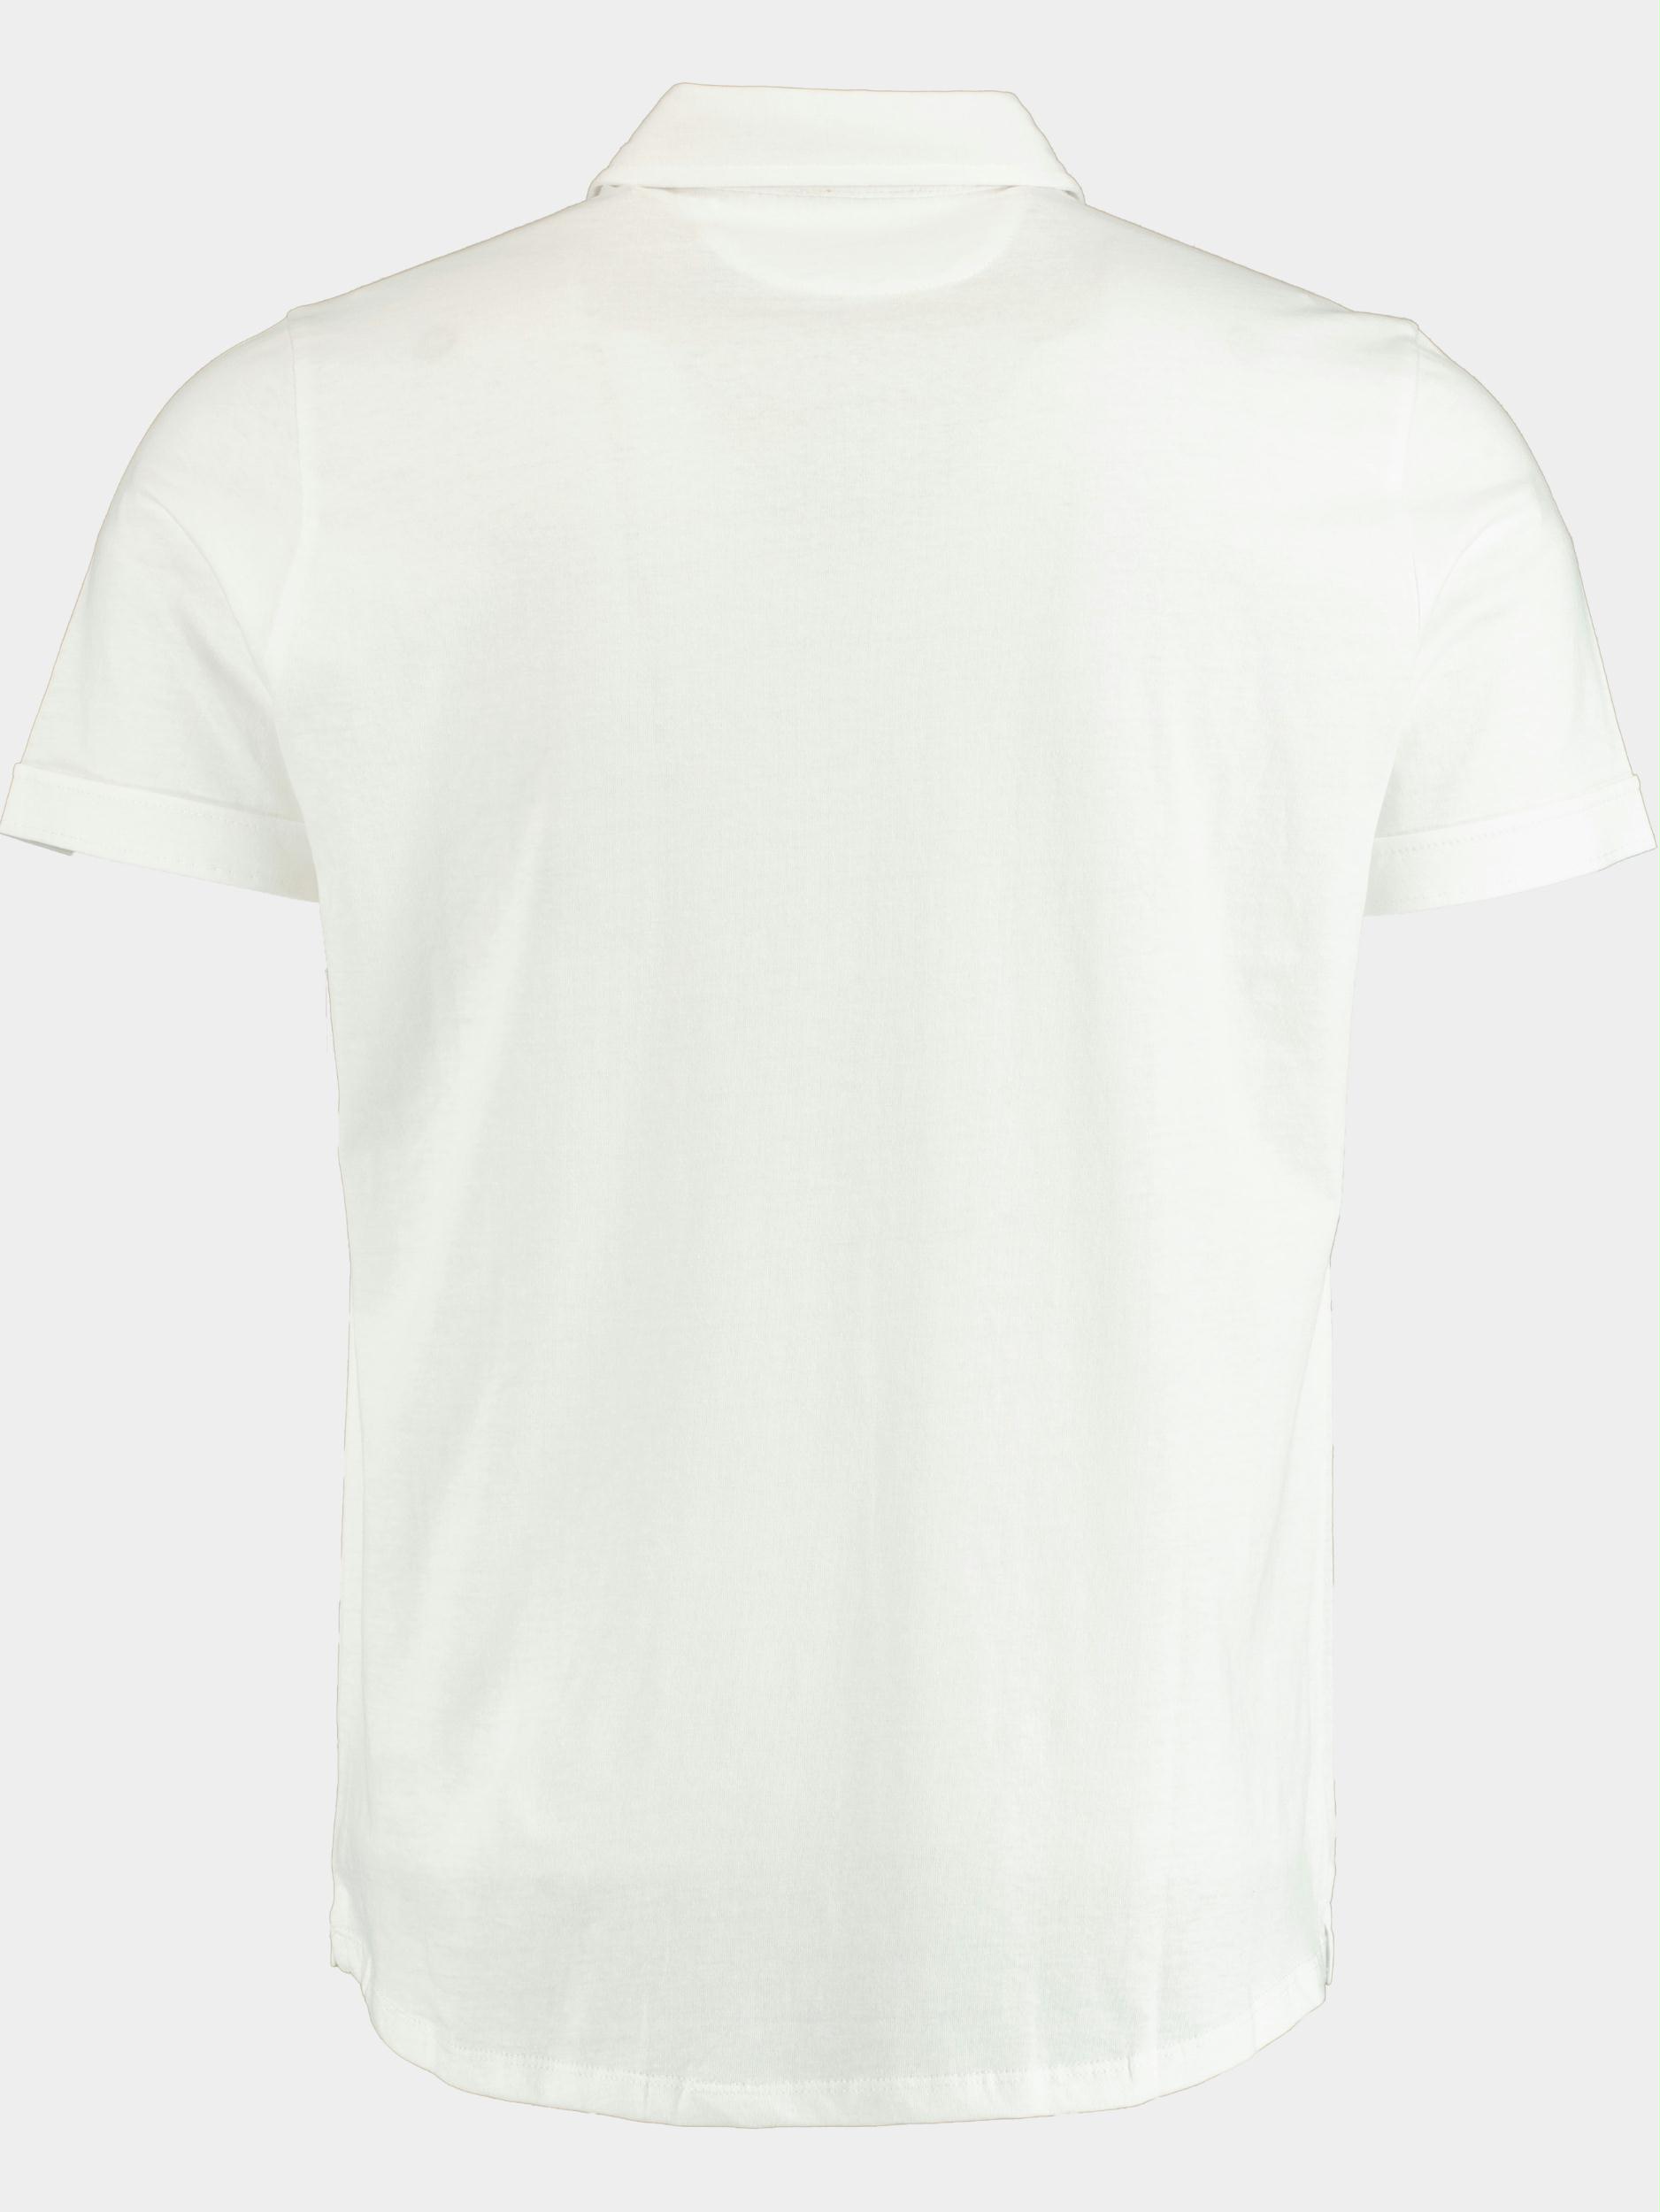 Consenso Casual hemd korte mouw Wit Doorgeknoopte polo 5902422/100 white